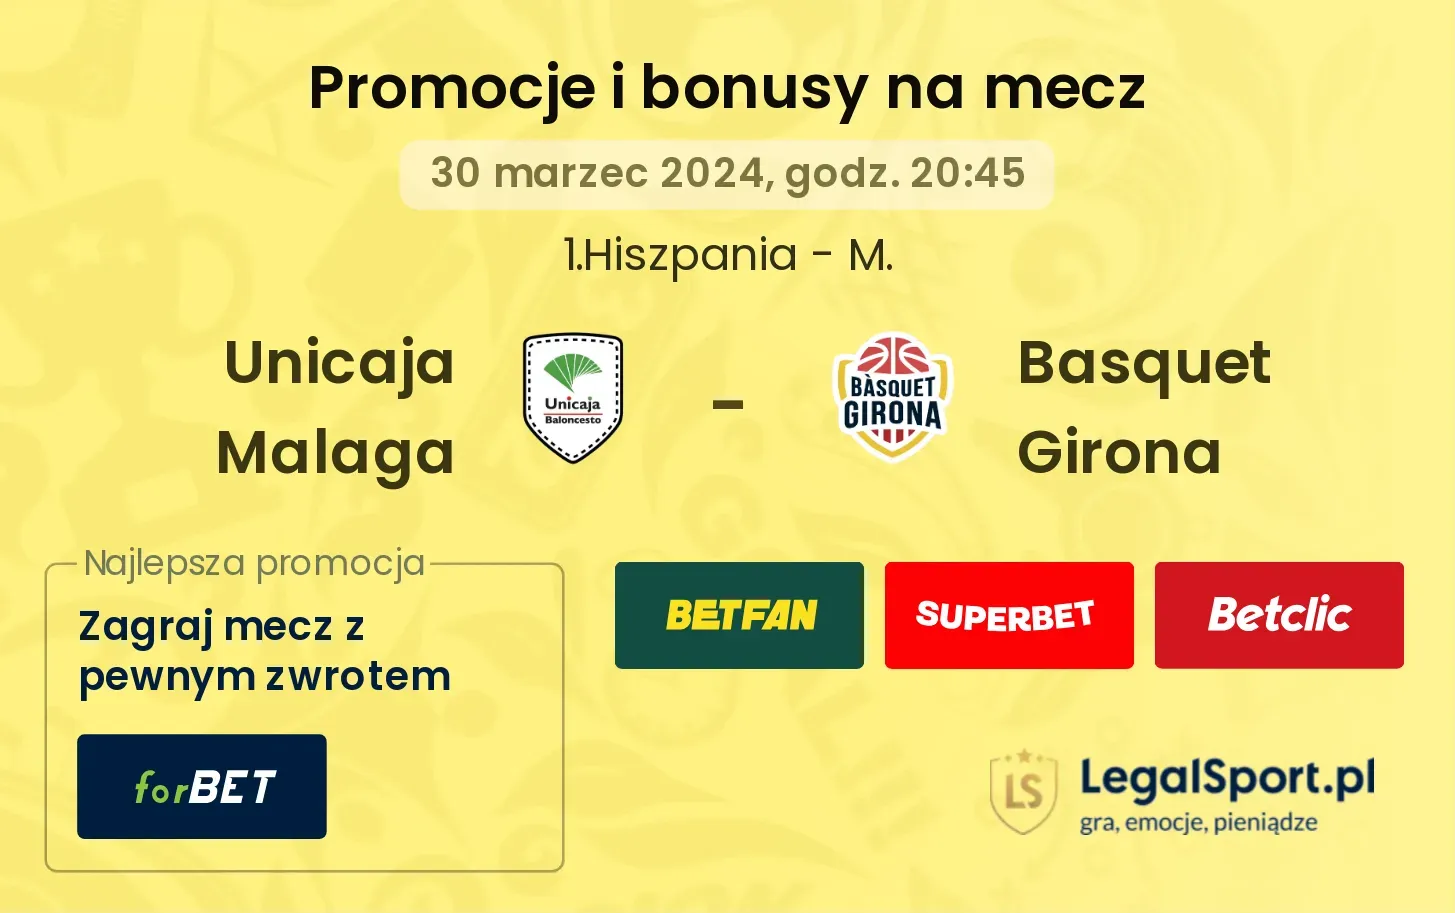 Unicaja Malaga - Basquet Girona promocje bonusy na mecz